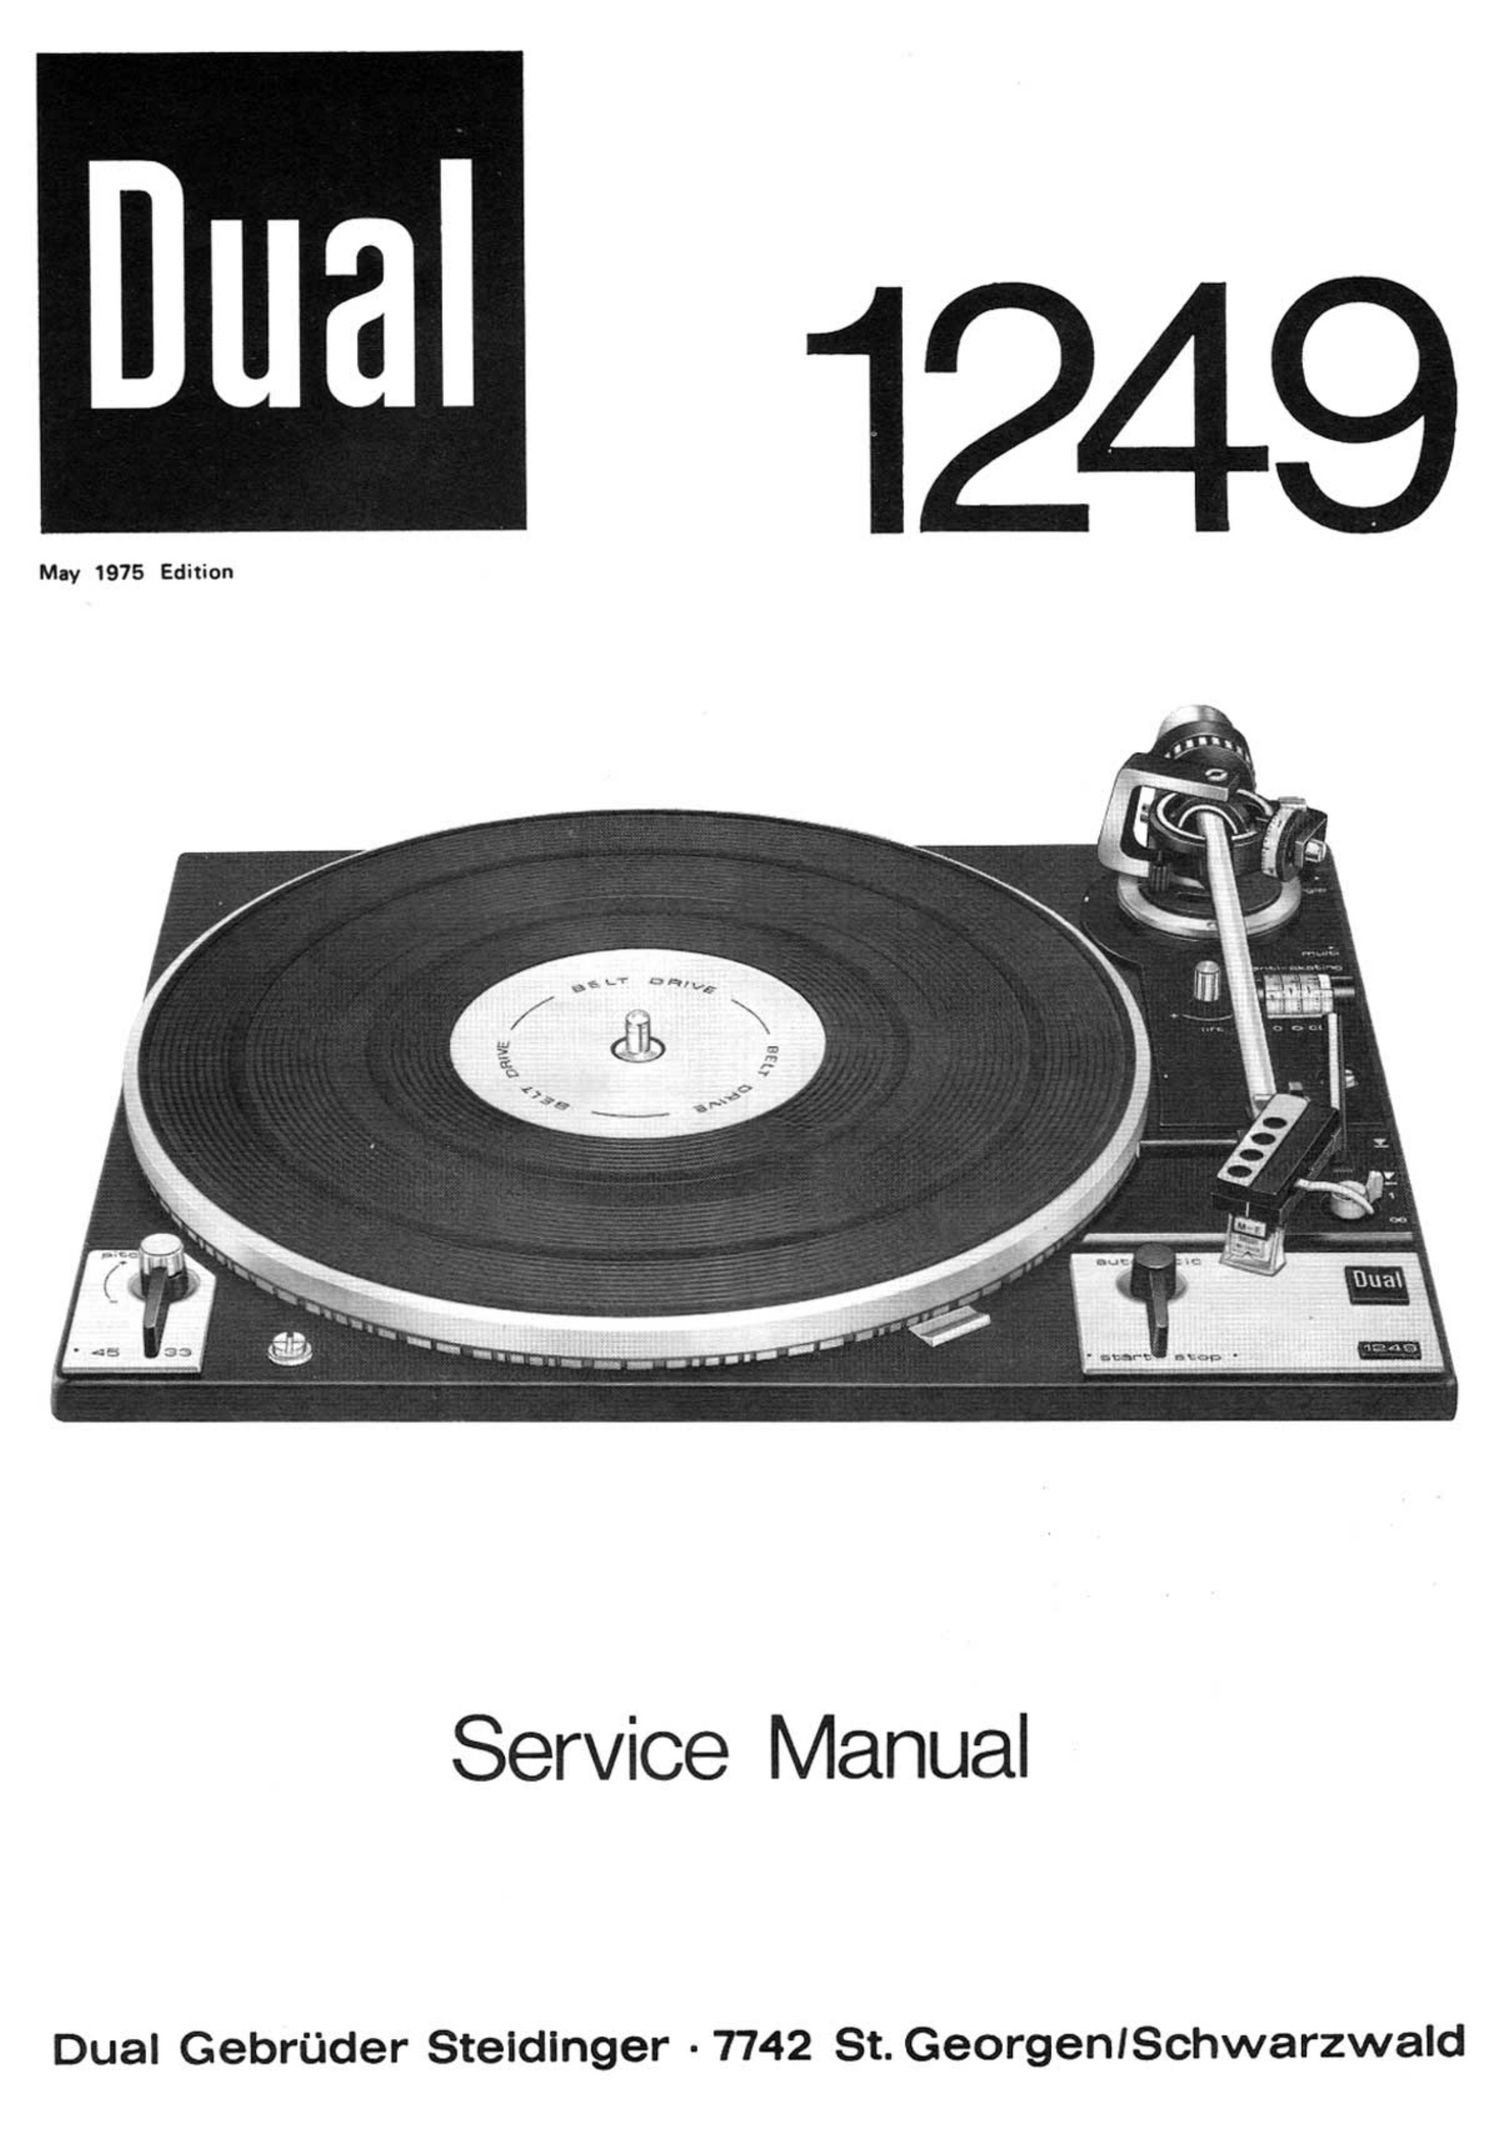 Dual 1249 Service Manual